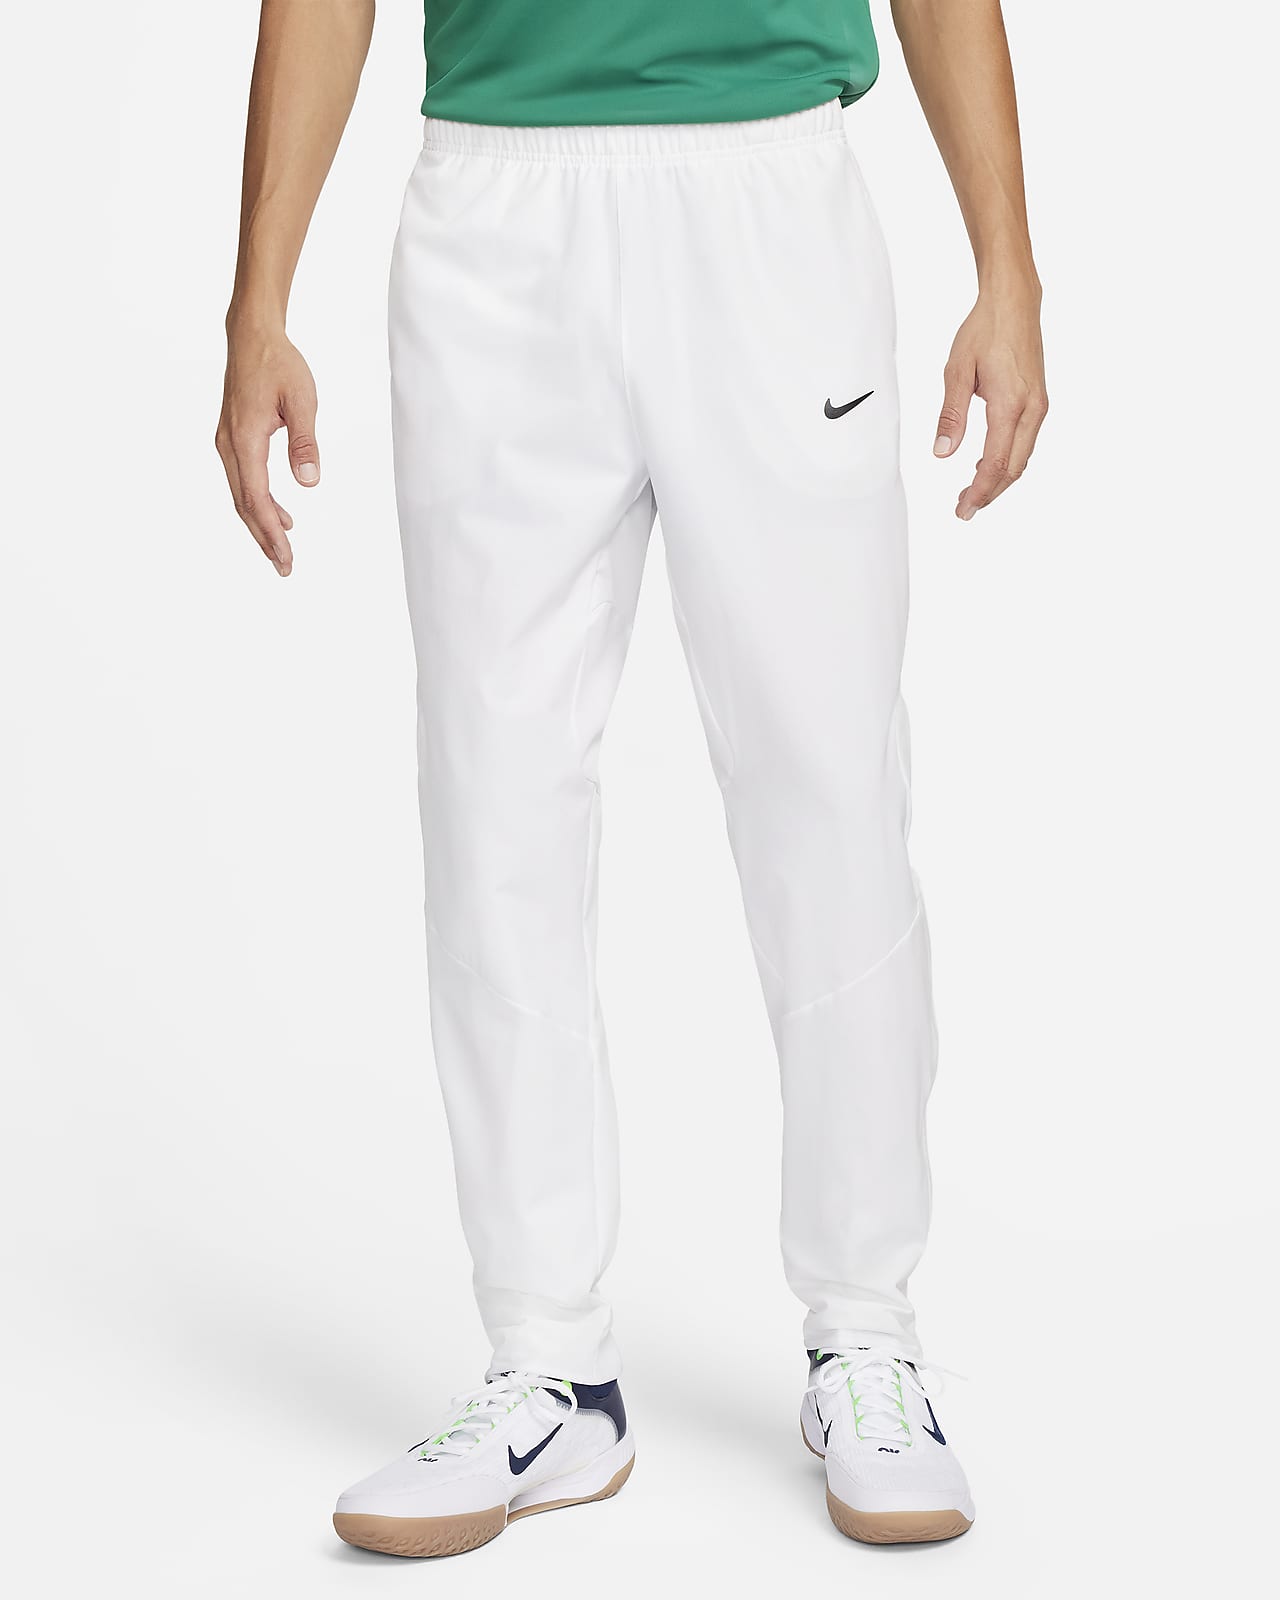 Nikecourt advantage men's tennis pants, Pants